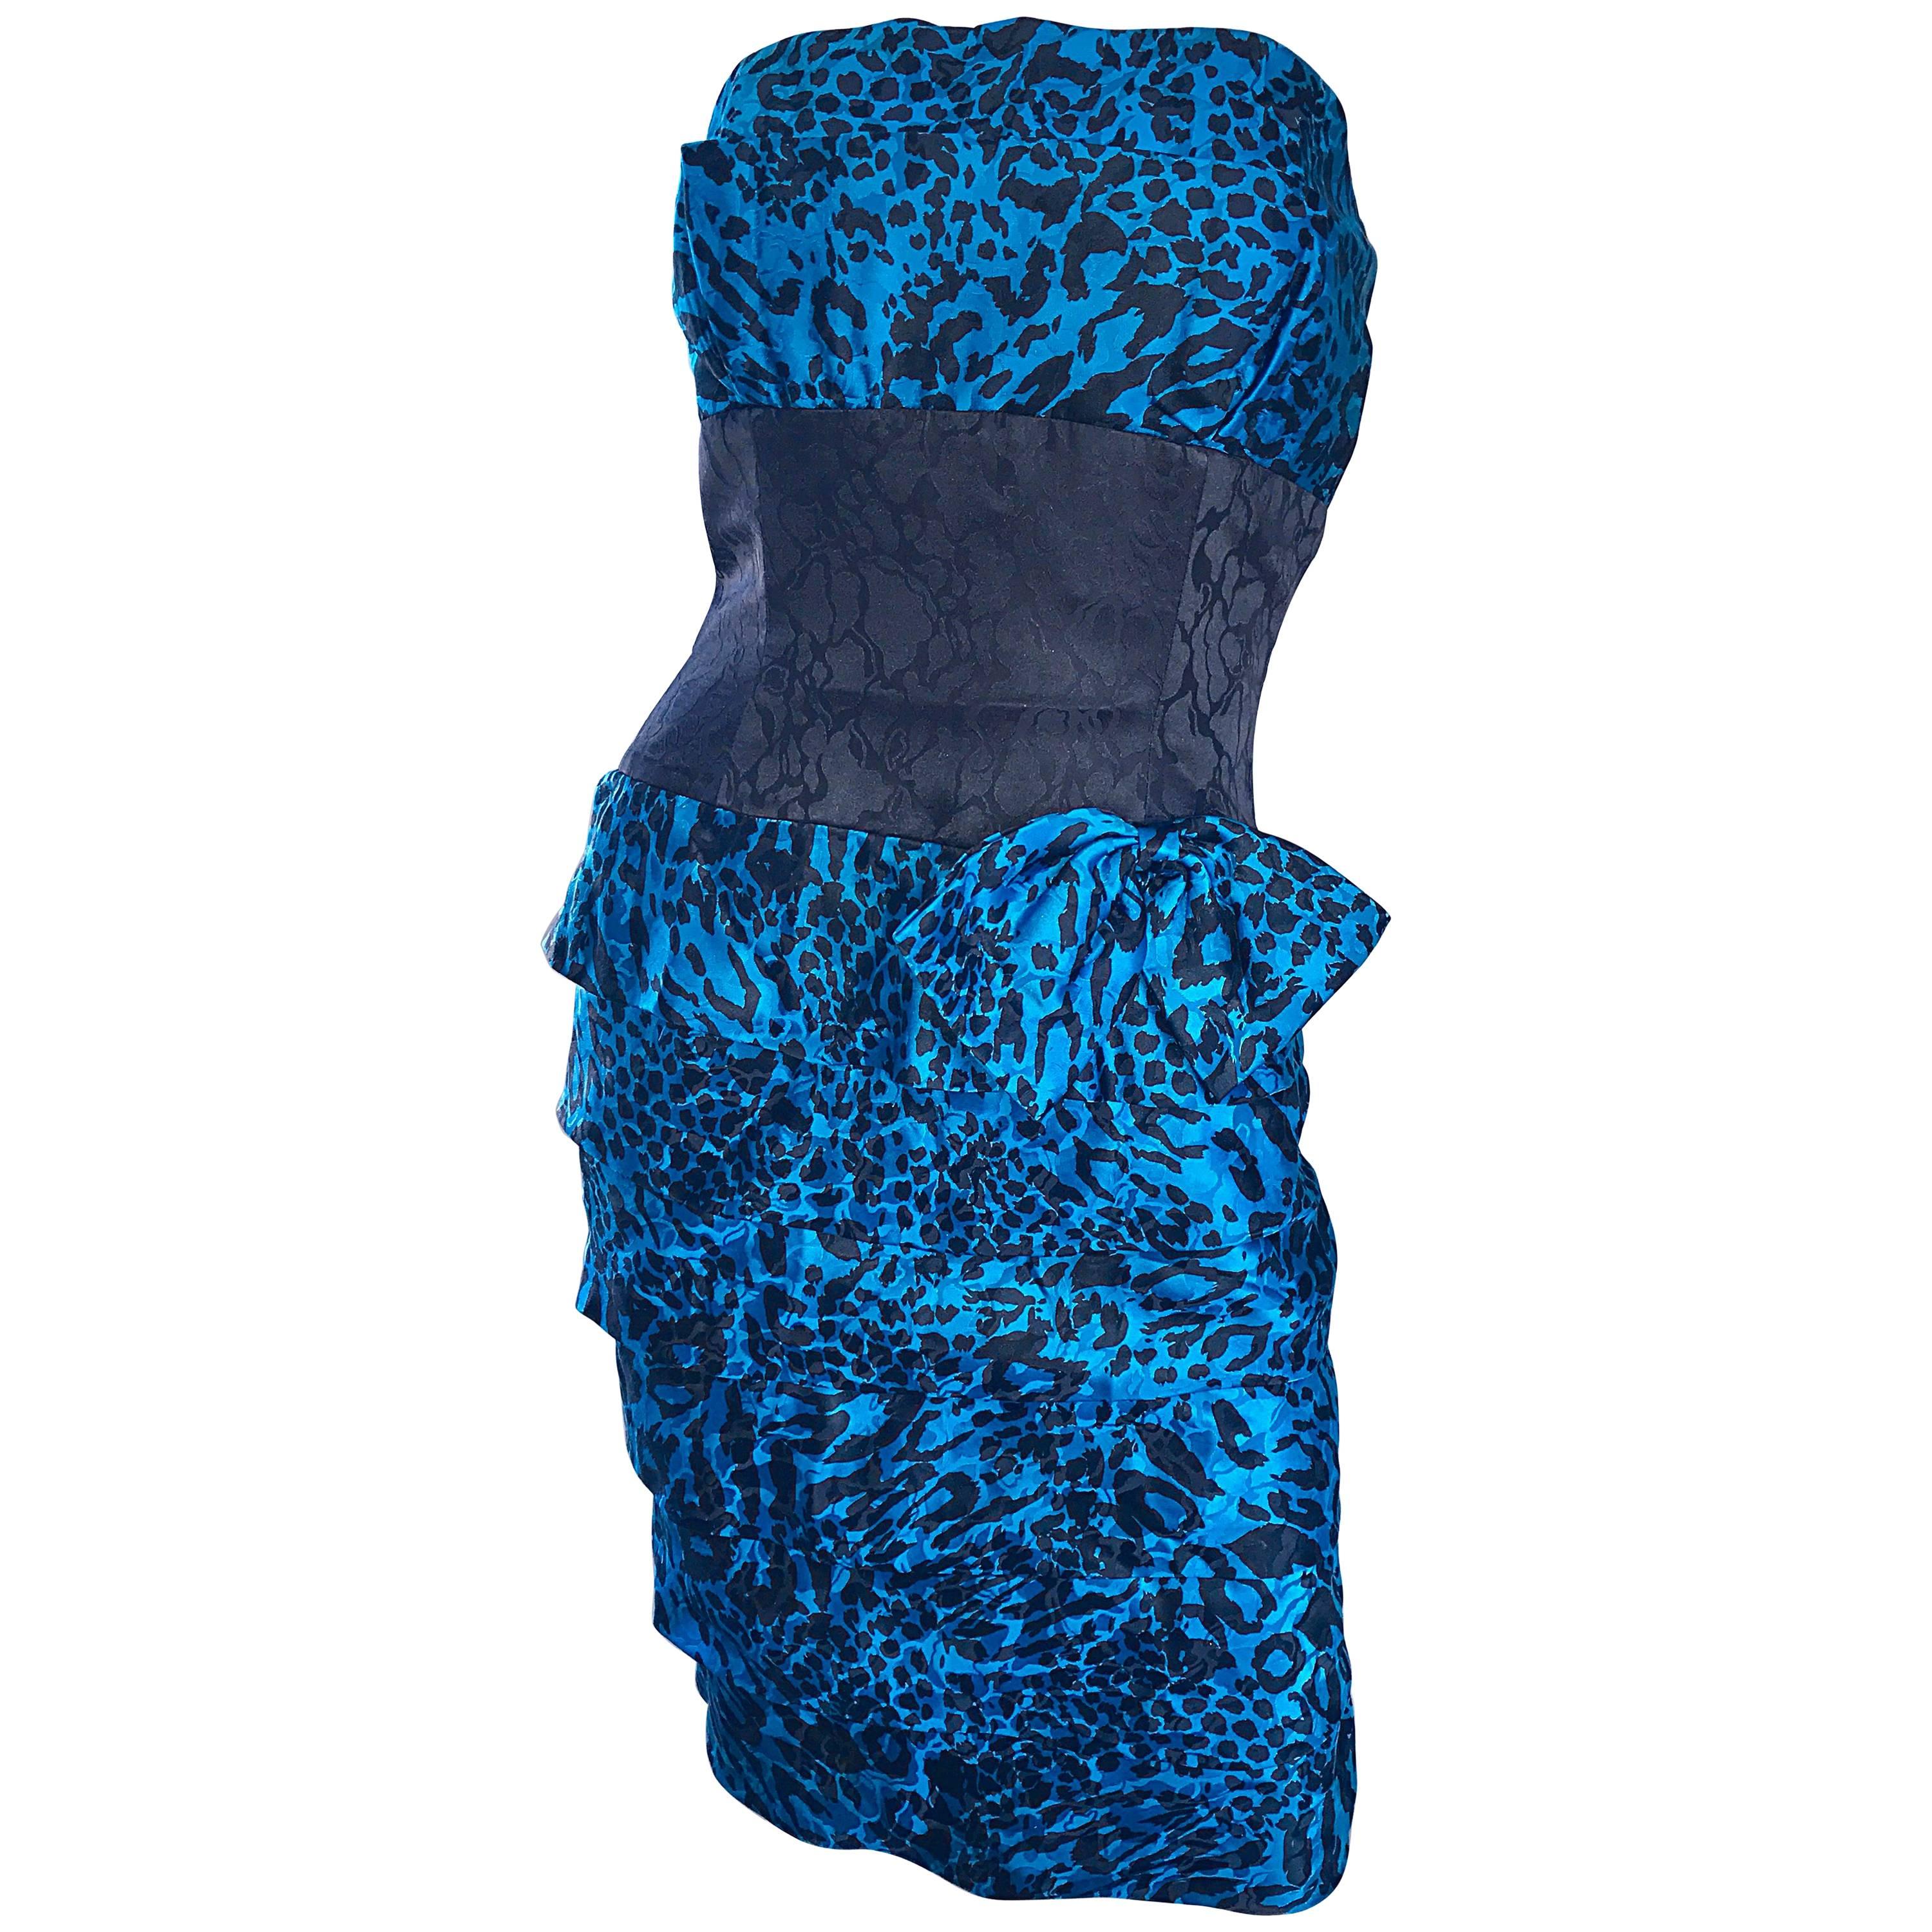 Fabulous 1980s Vintage Blue and Black Leopard Print Silk Strapless 80s Bow Dress